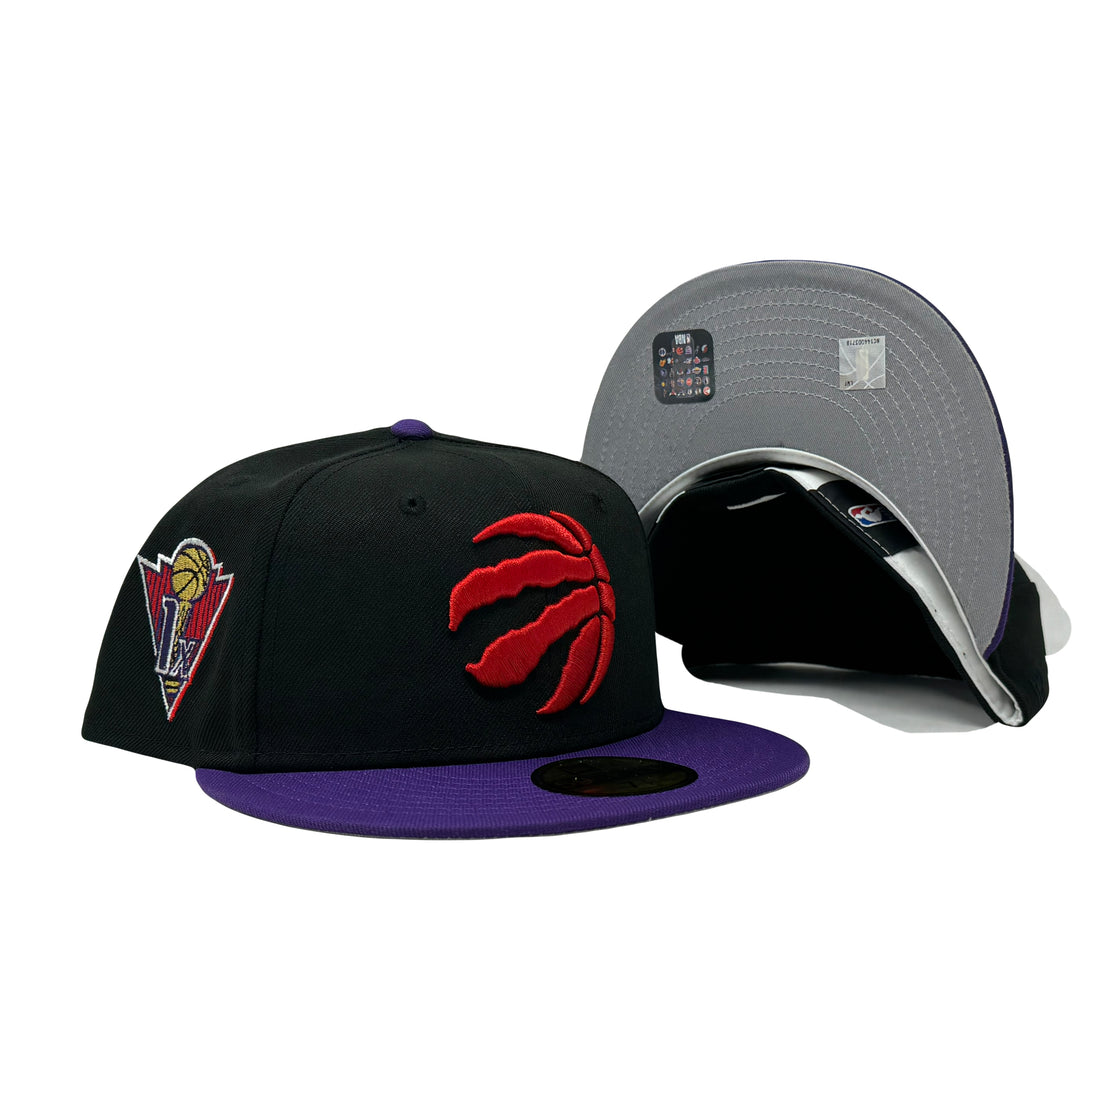 Toronto Raptors 1X NBA Champions 5950 New Era Fitted Hat Black